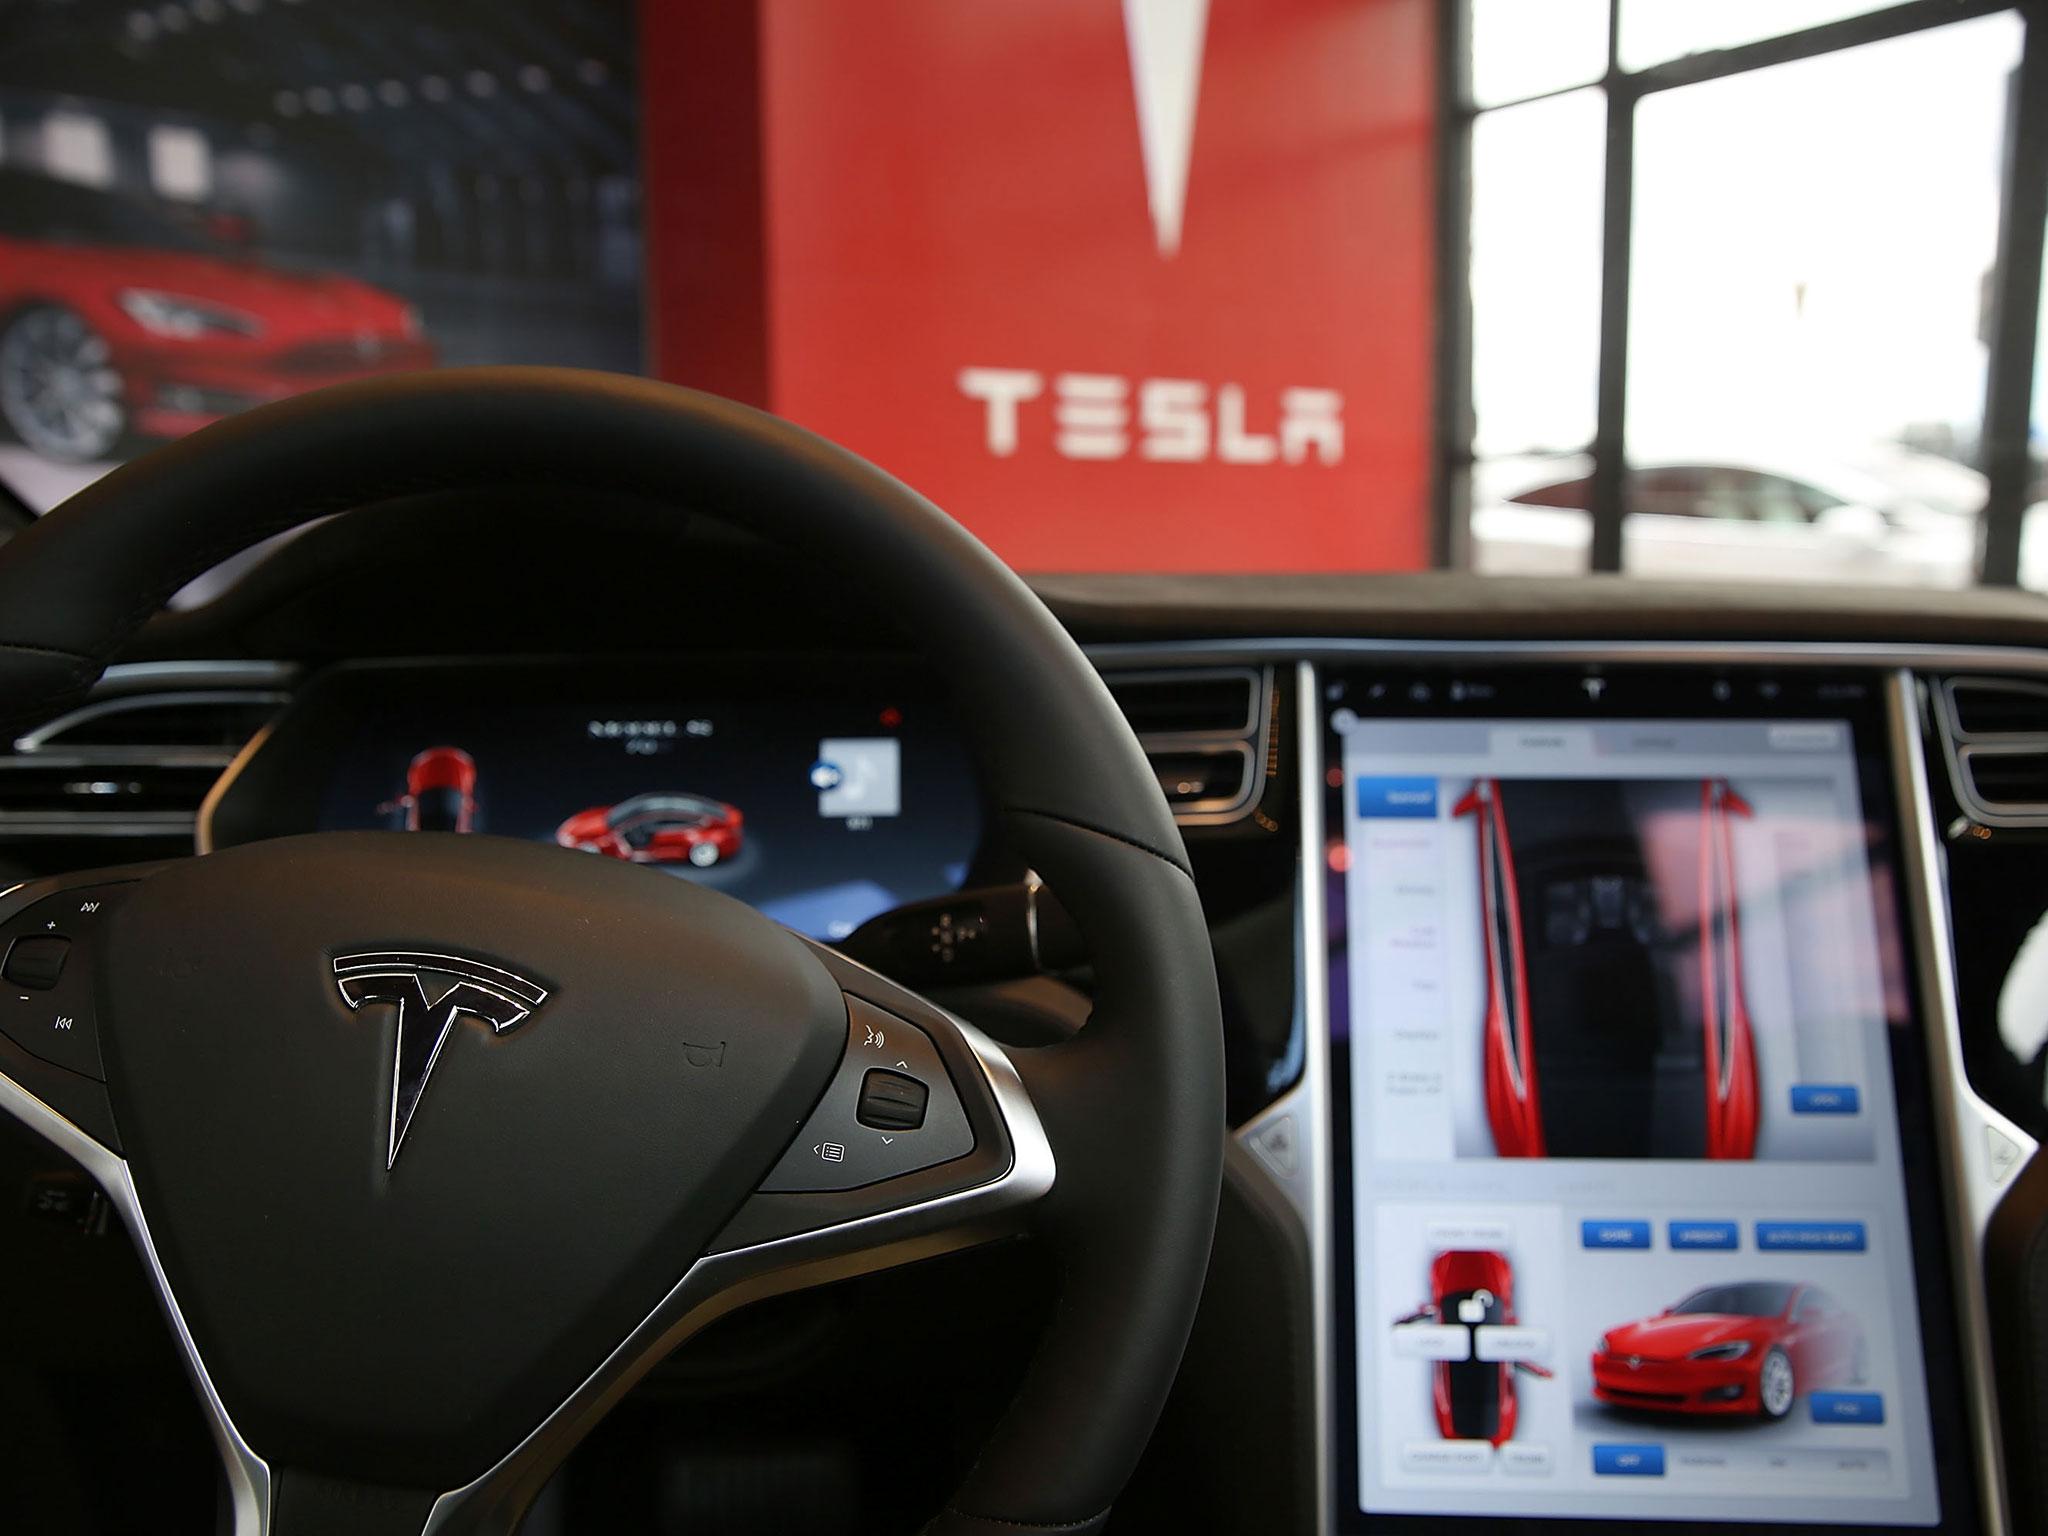 Tesla car in the showroom